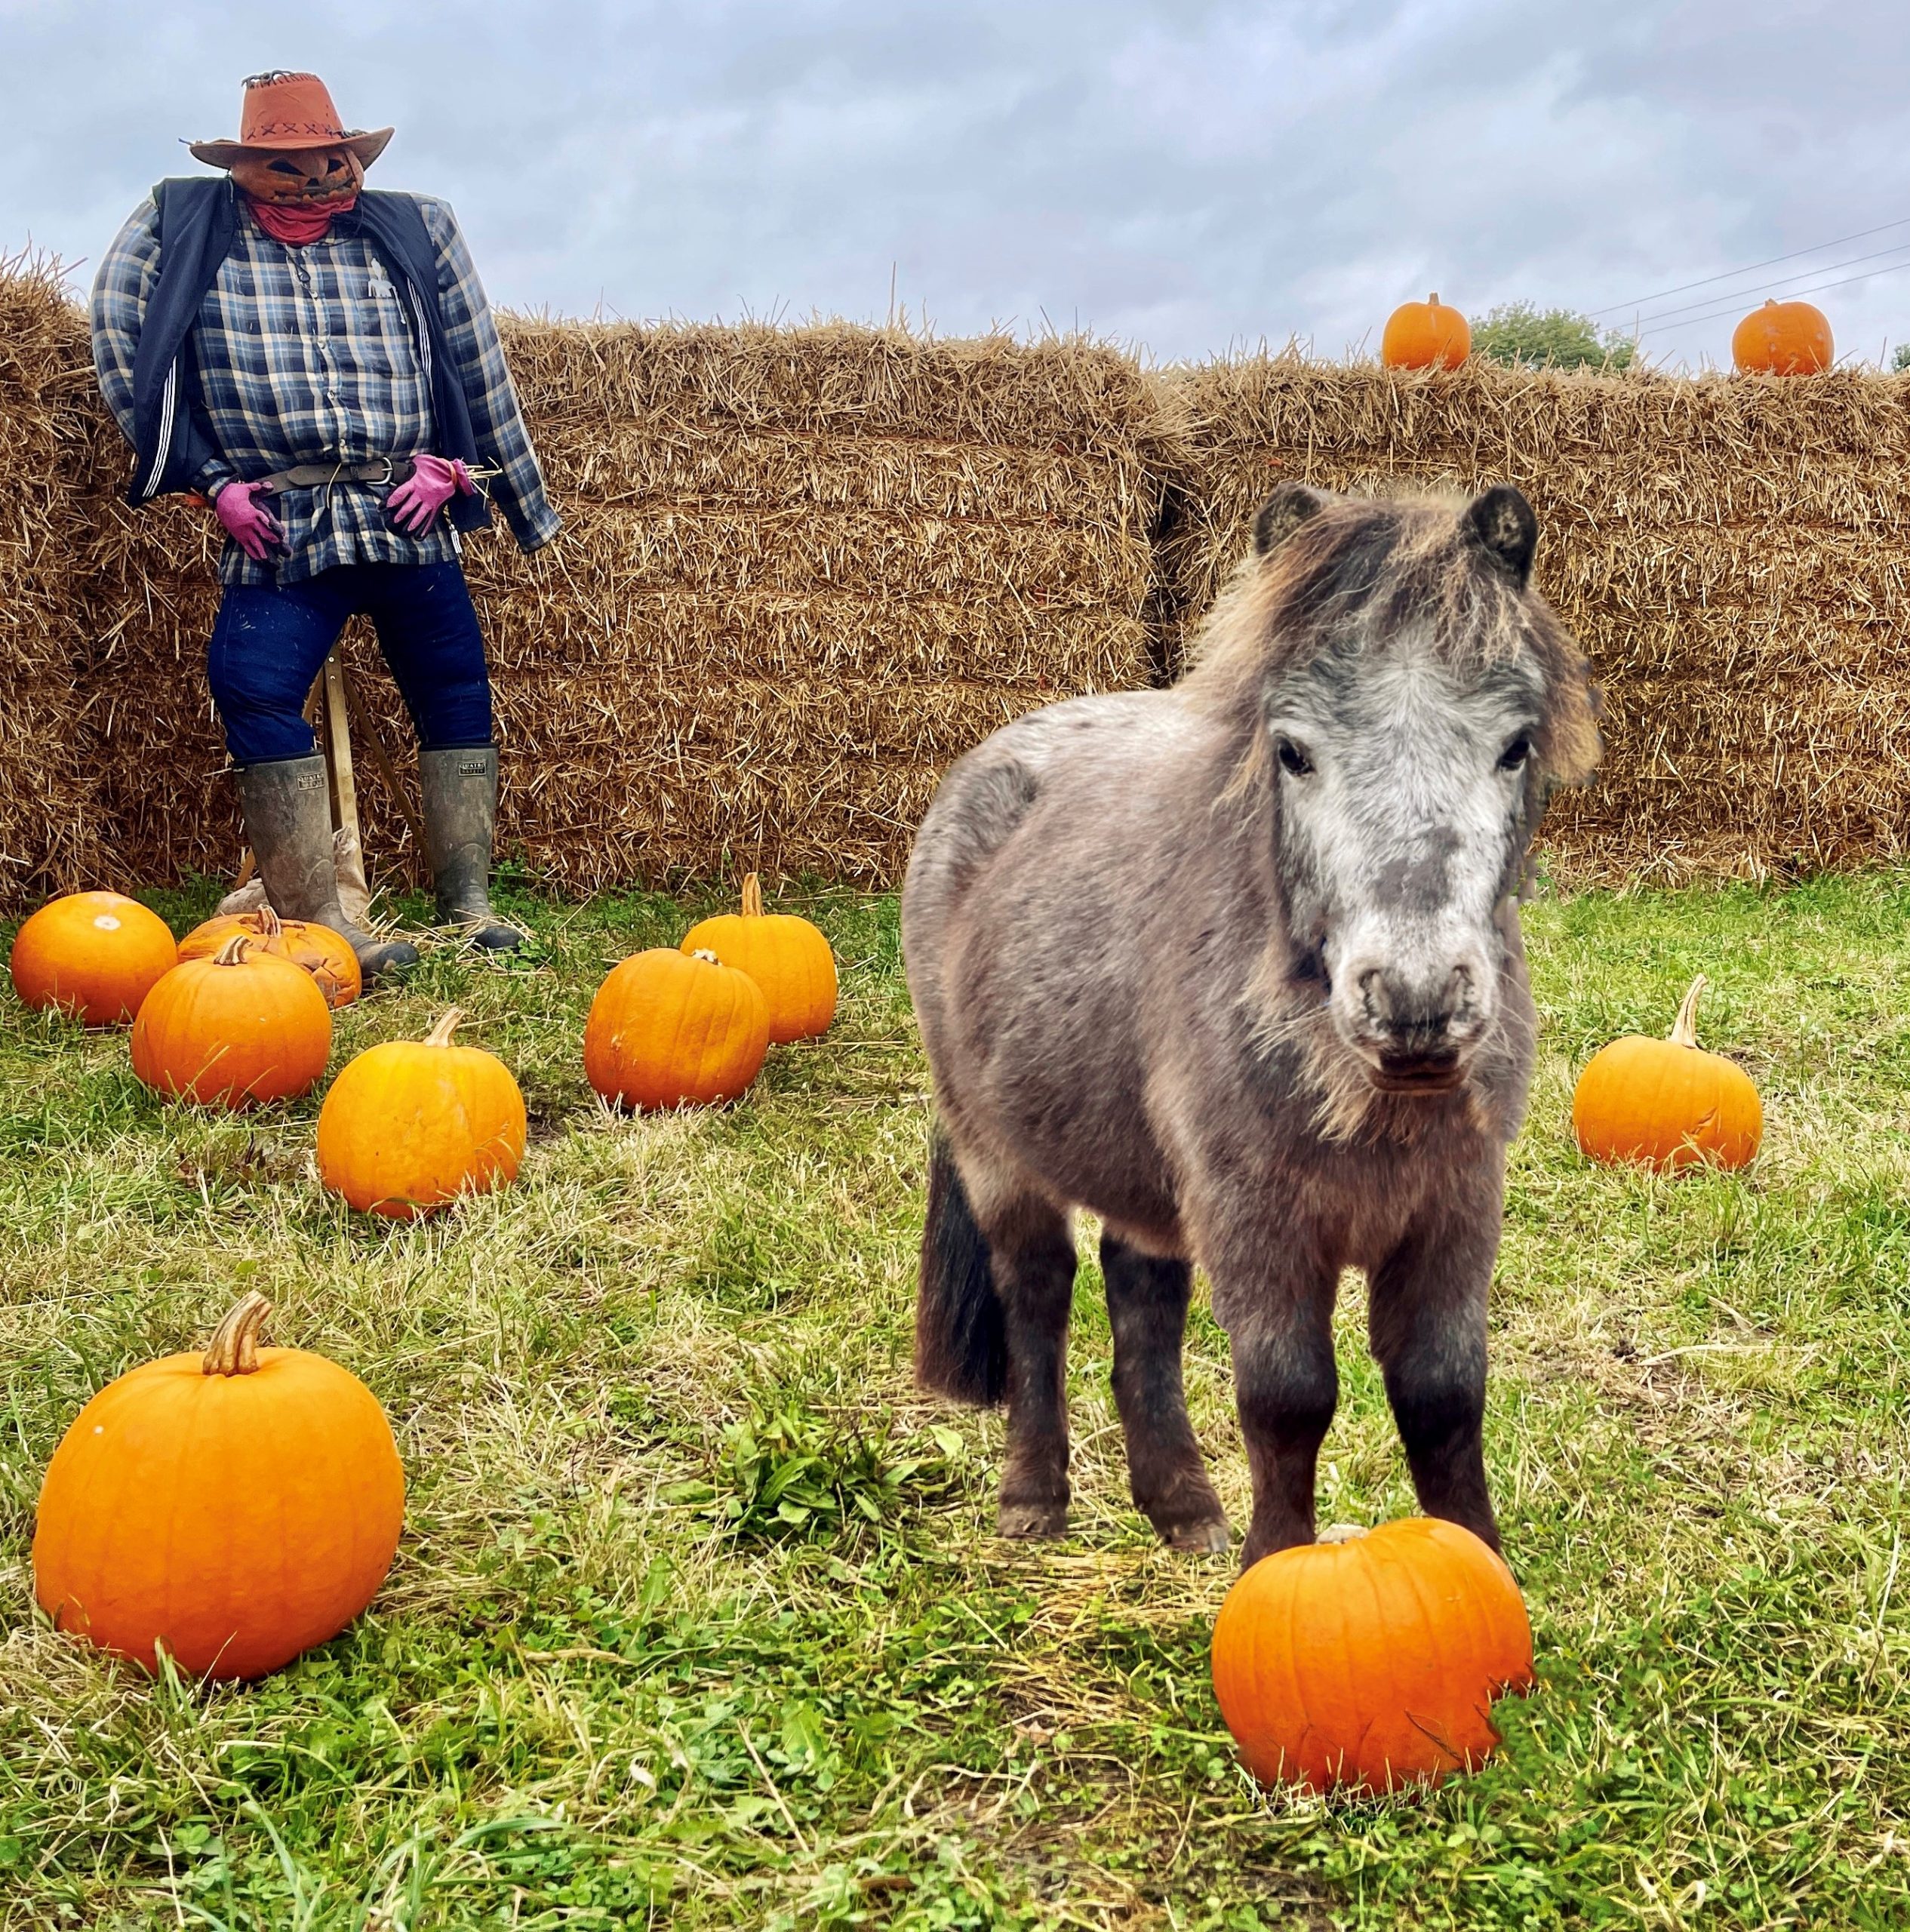 Pecan the Shetland pony on his pumpkin patch